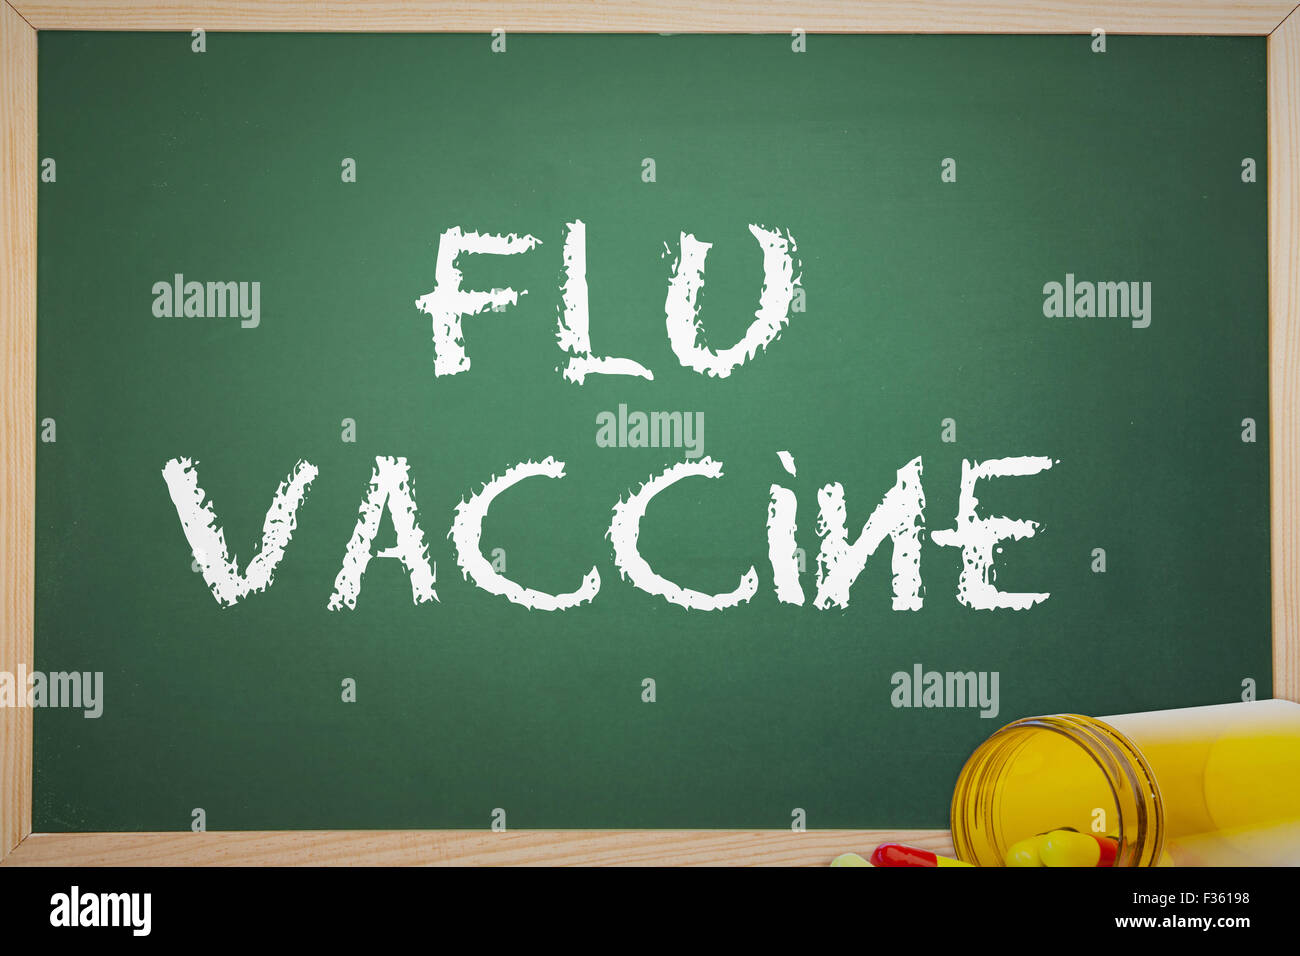 Composite image of flu vaccine Stock Photo